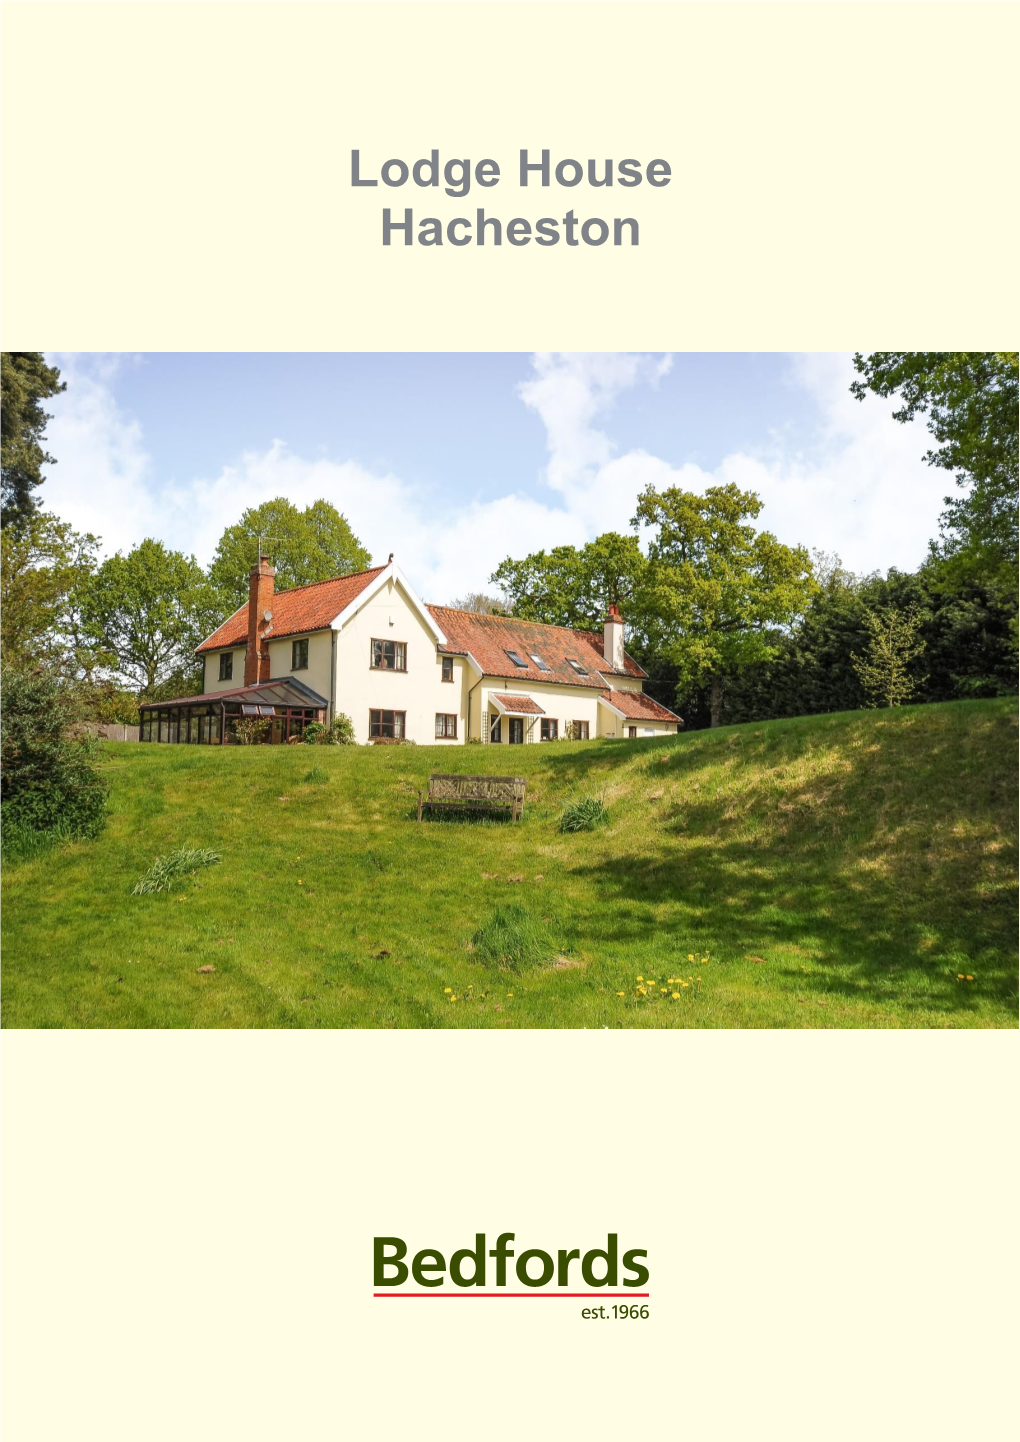 Lodge House Hacheston Address